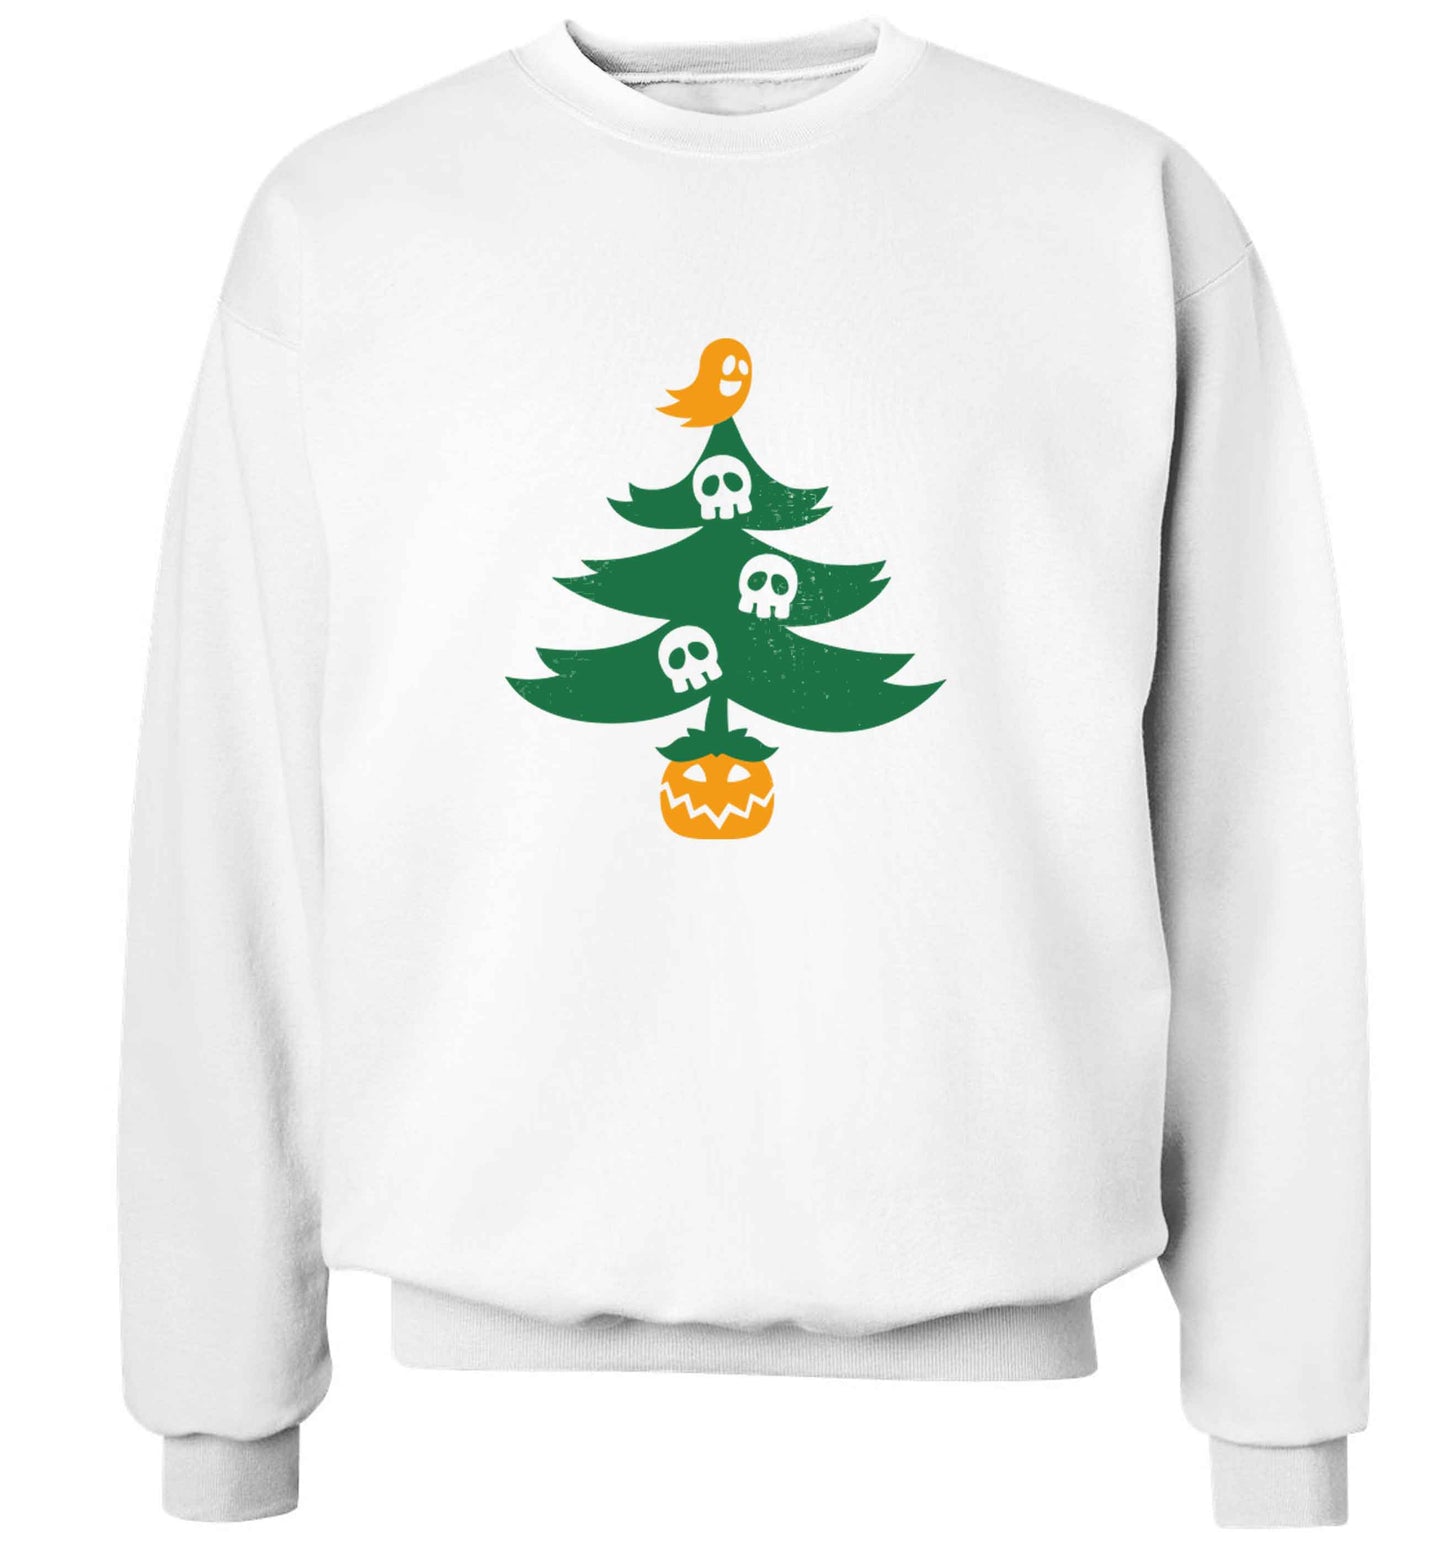 Halloween Christmas tree adult's unisex white sweater 2XL